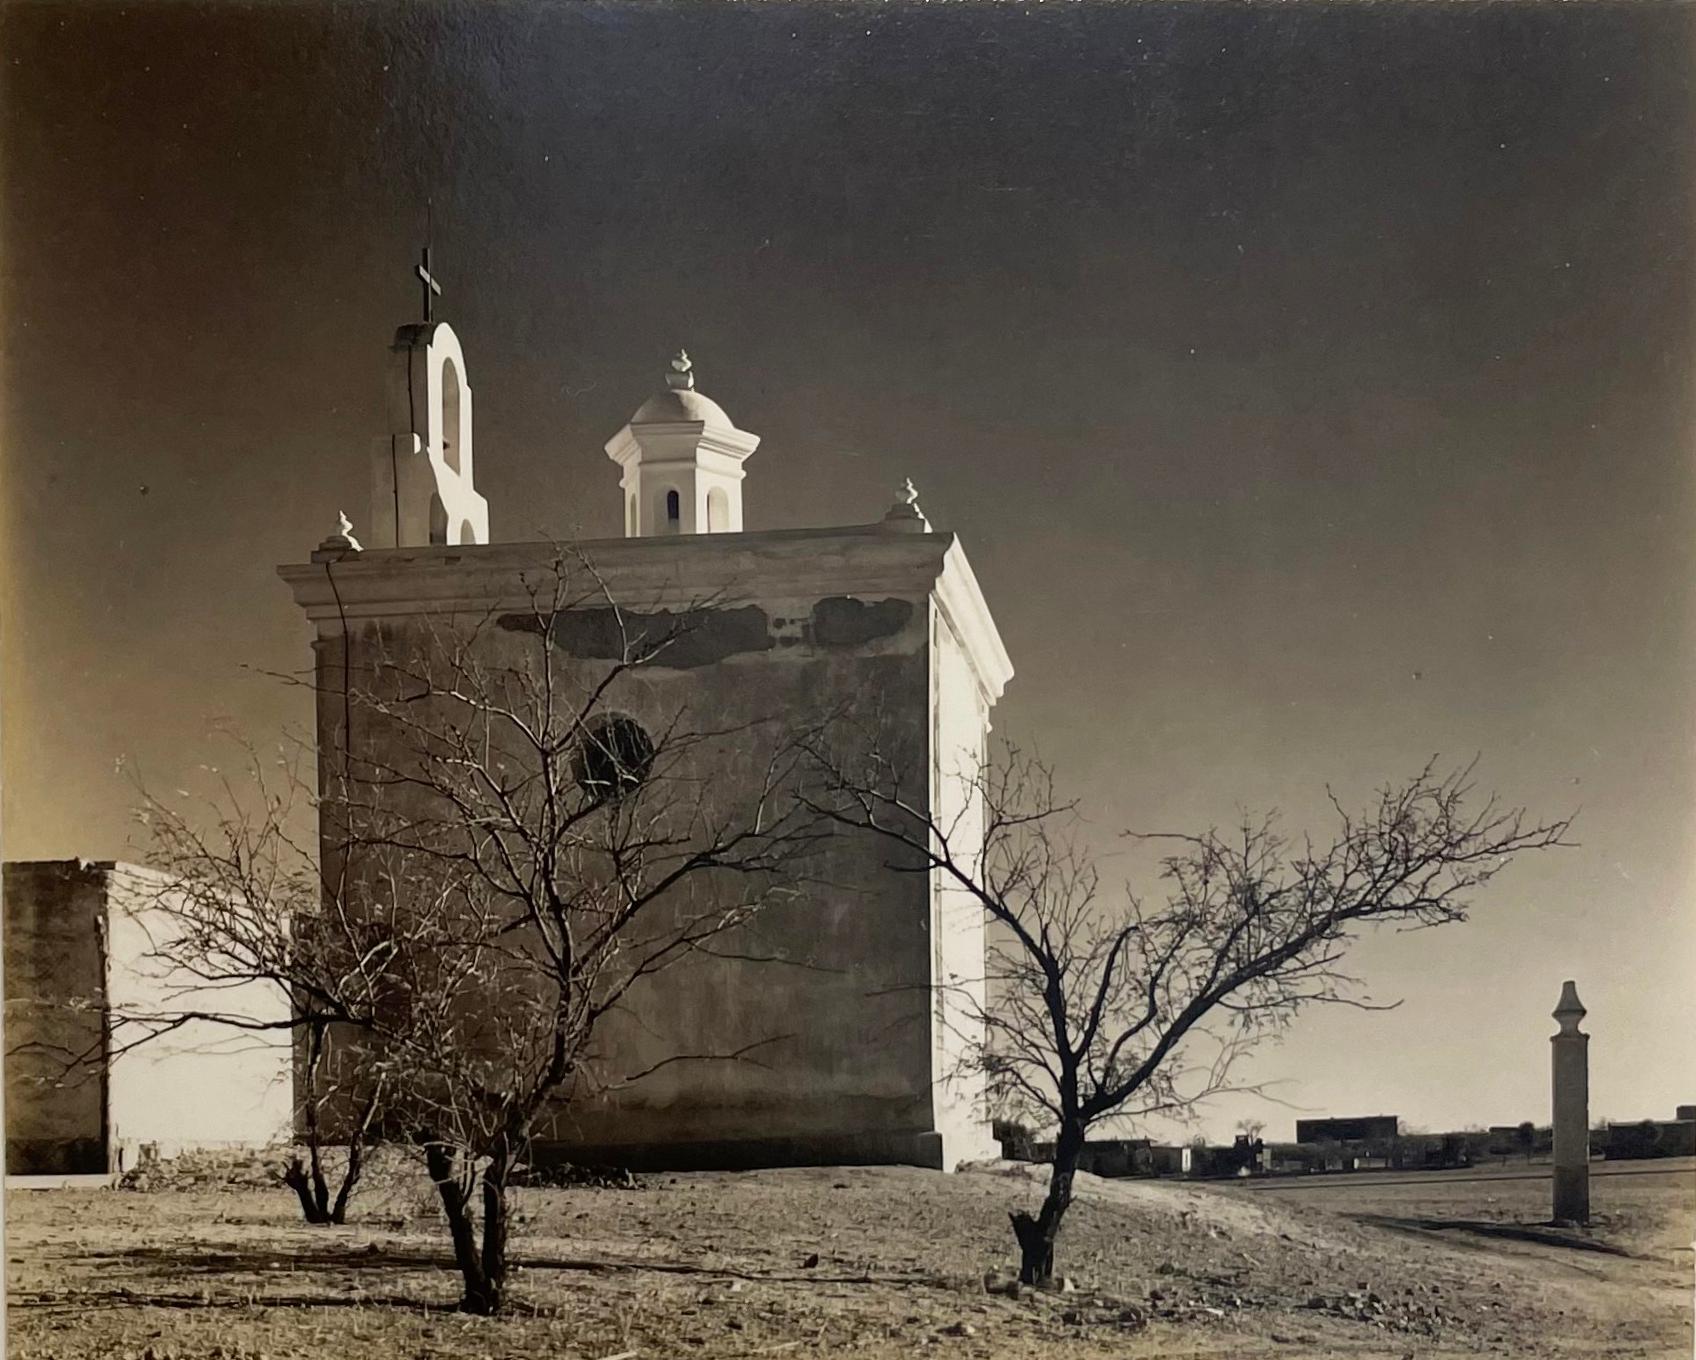 Ansel Adams Black and White Photograph - Mission San Xavier del Bac, Tuscon, Arizona